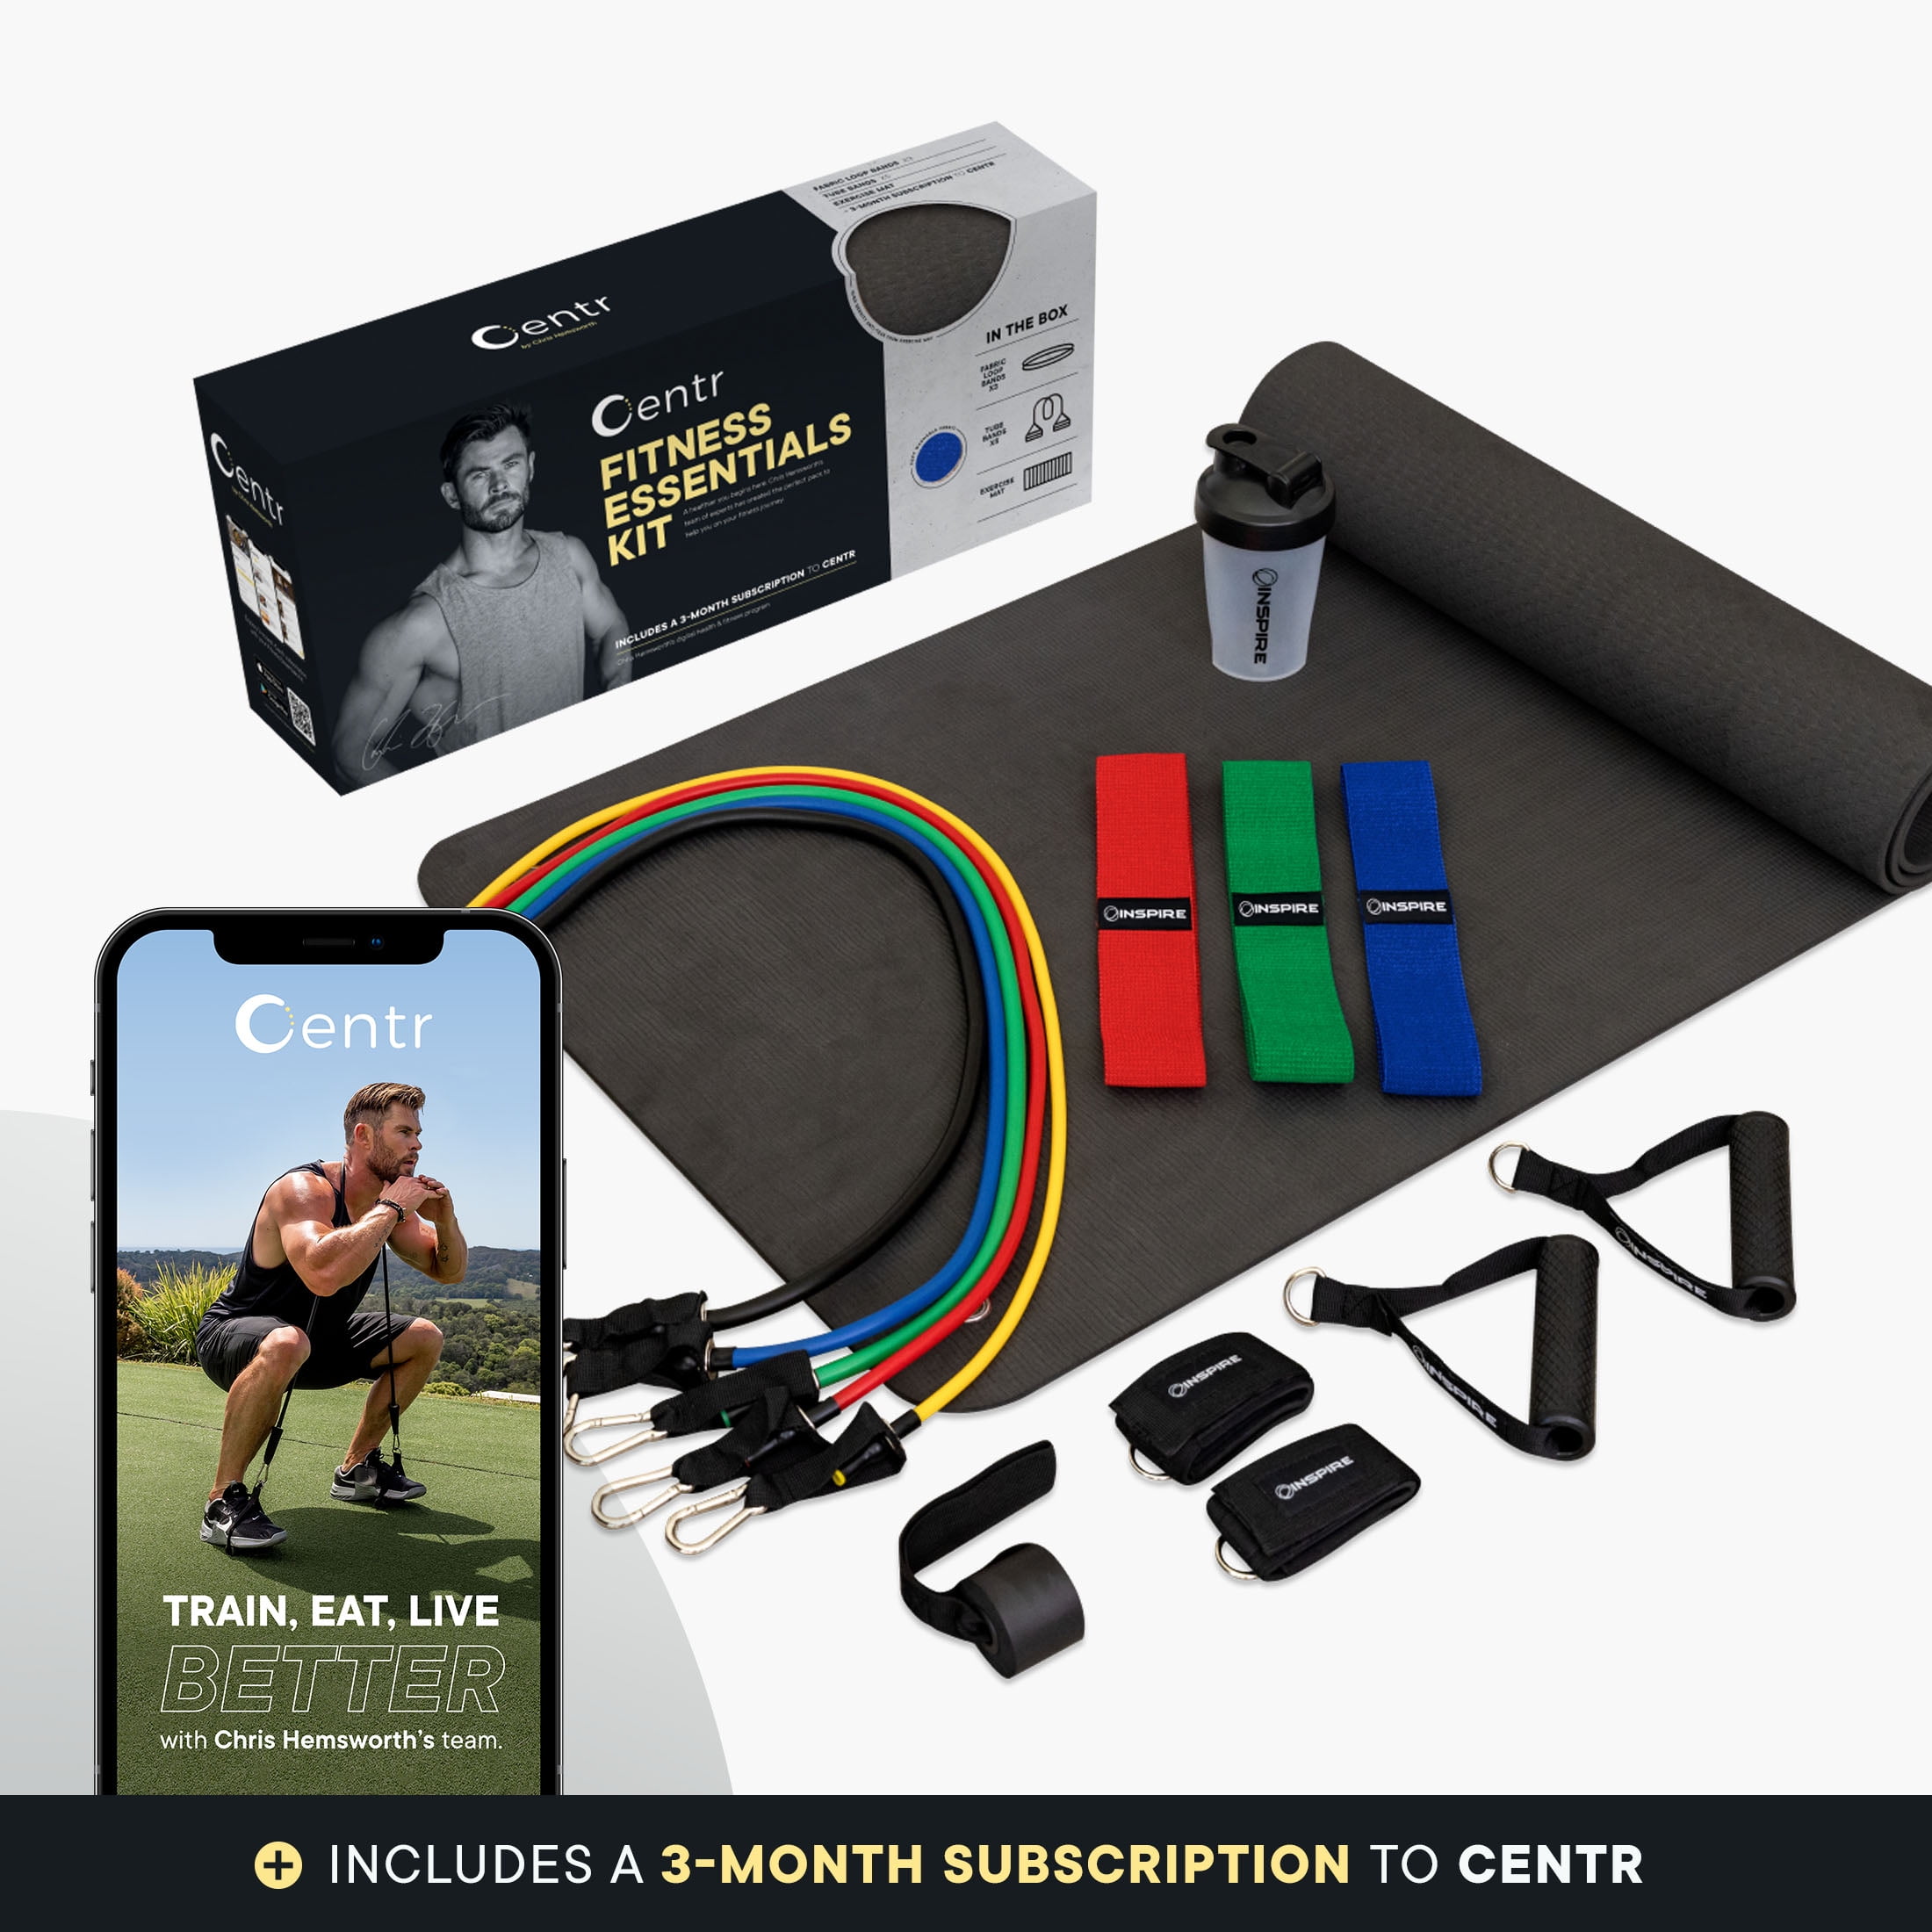 Chris Hemsworth's Centr Fitness Kit with 3-Month UK